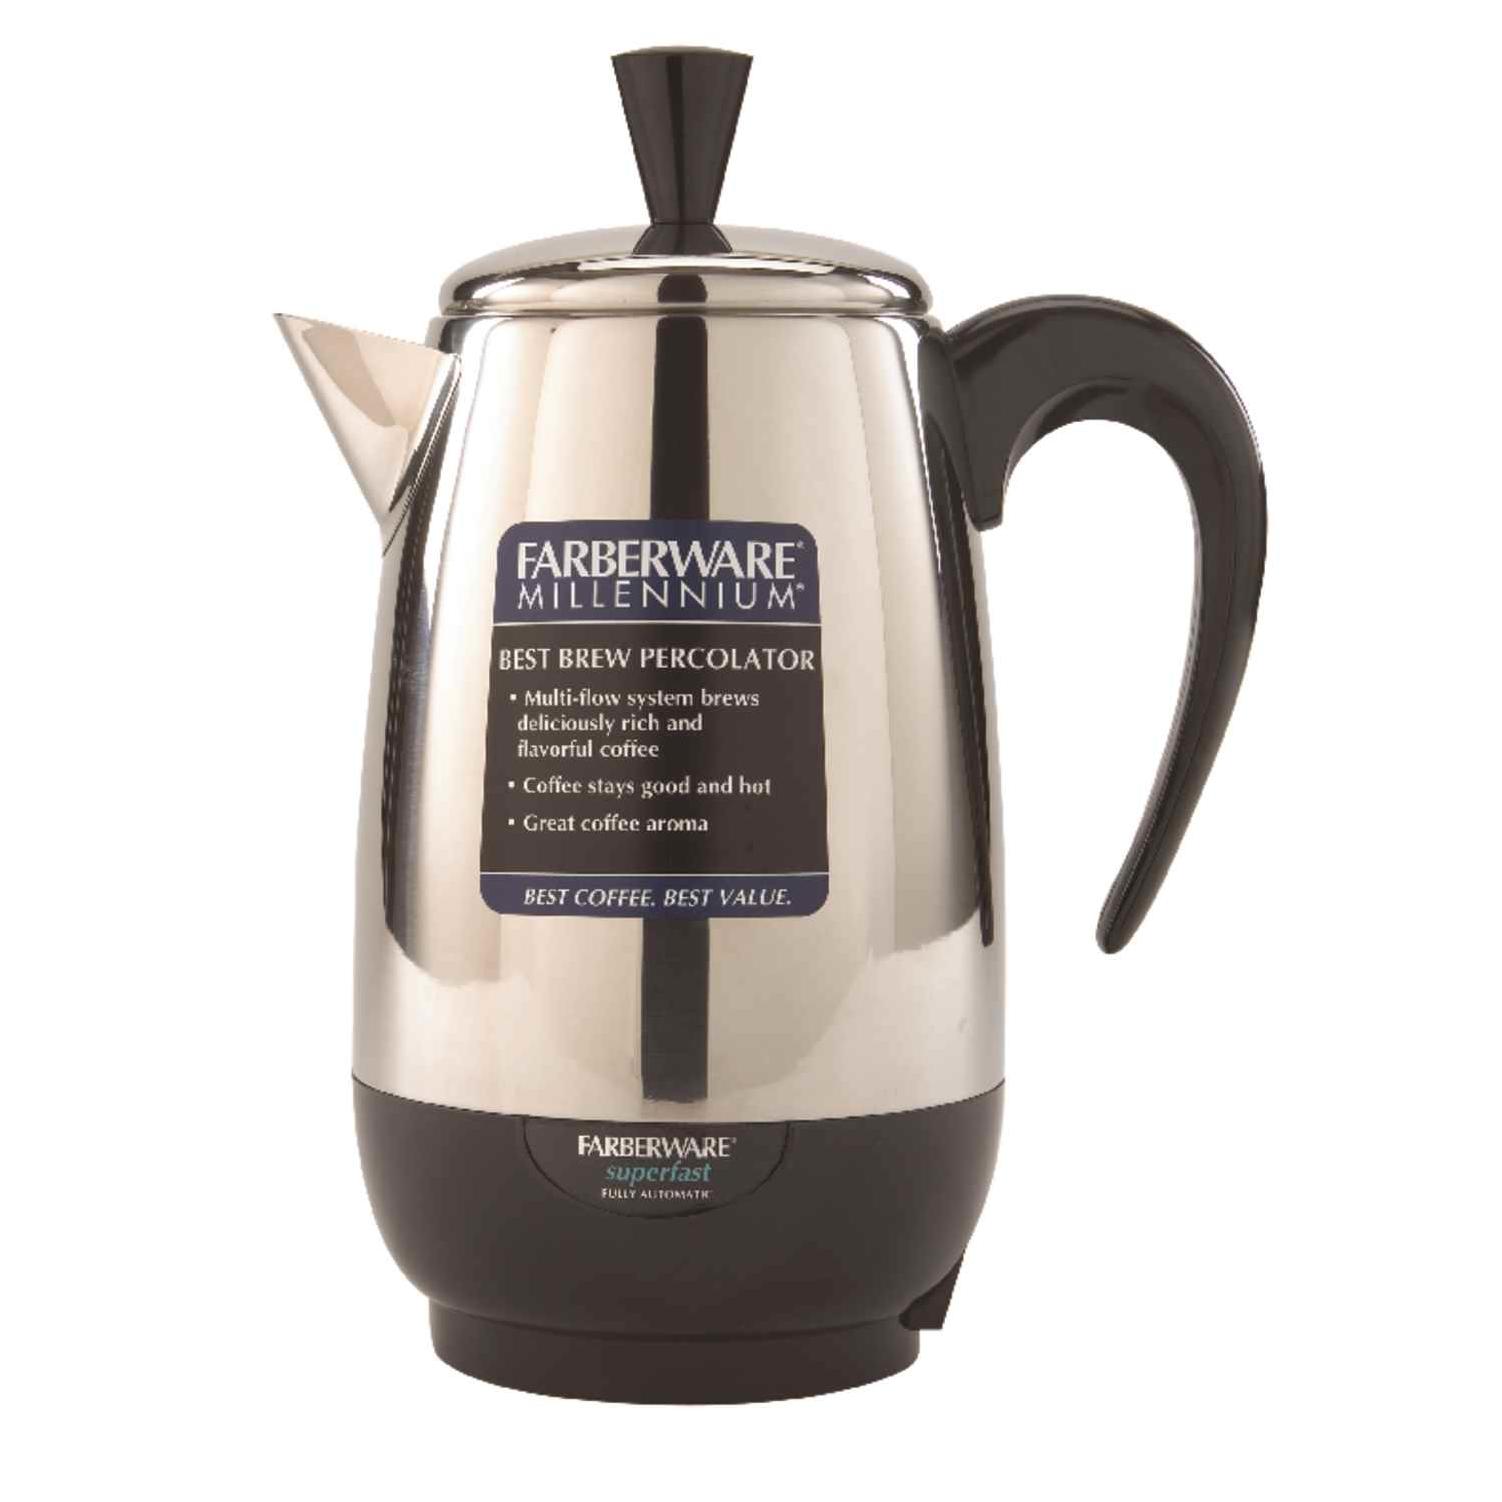 Farberware Superfast Fully Automatic Coffee Percolator 8 Cup